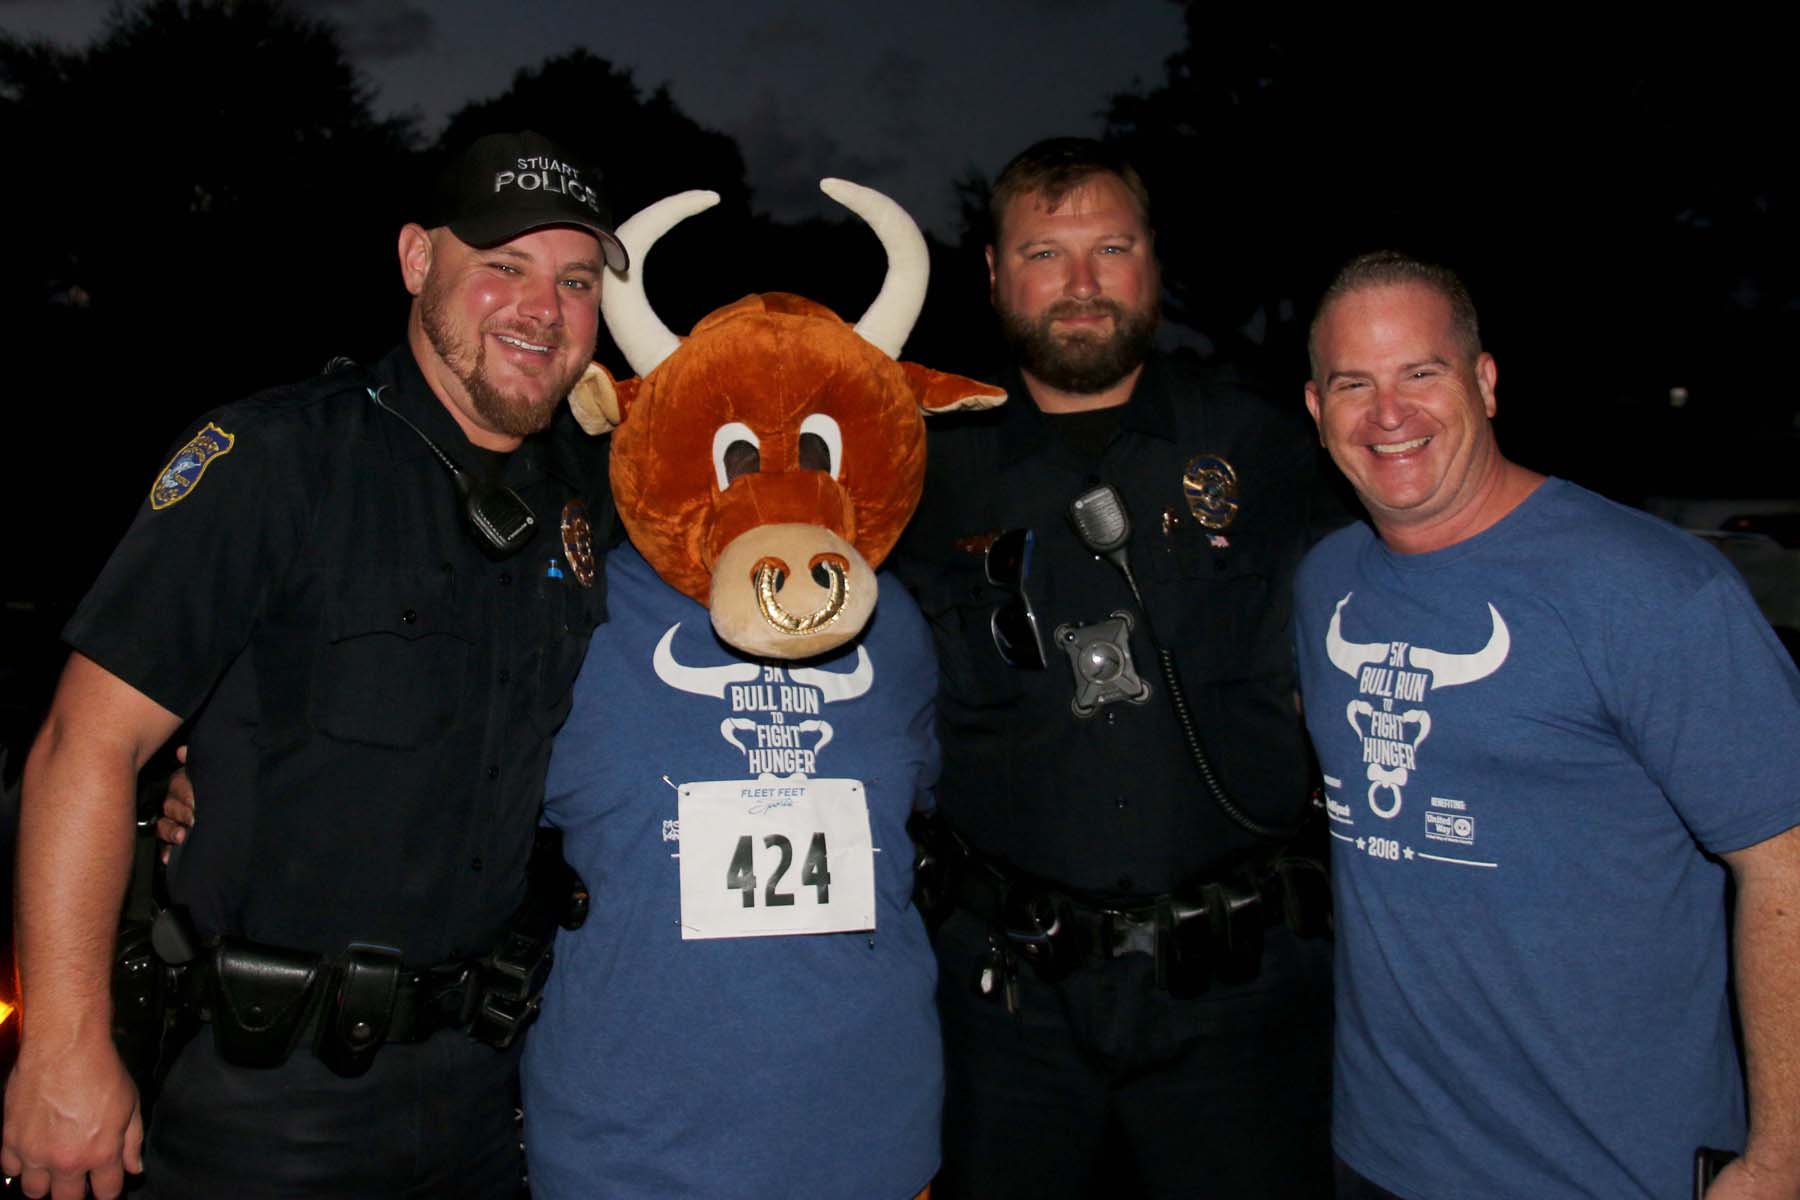 Runner and police next to bull mascot